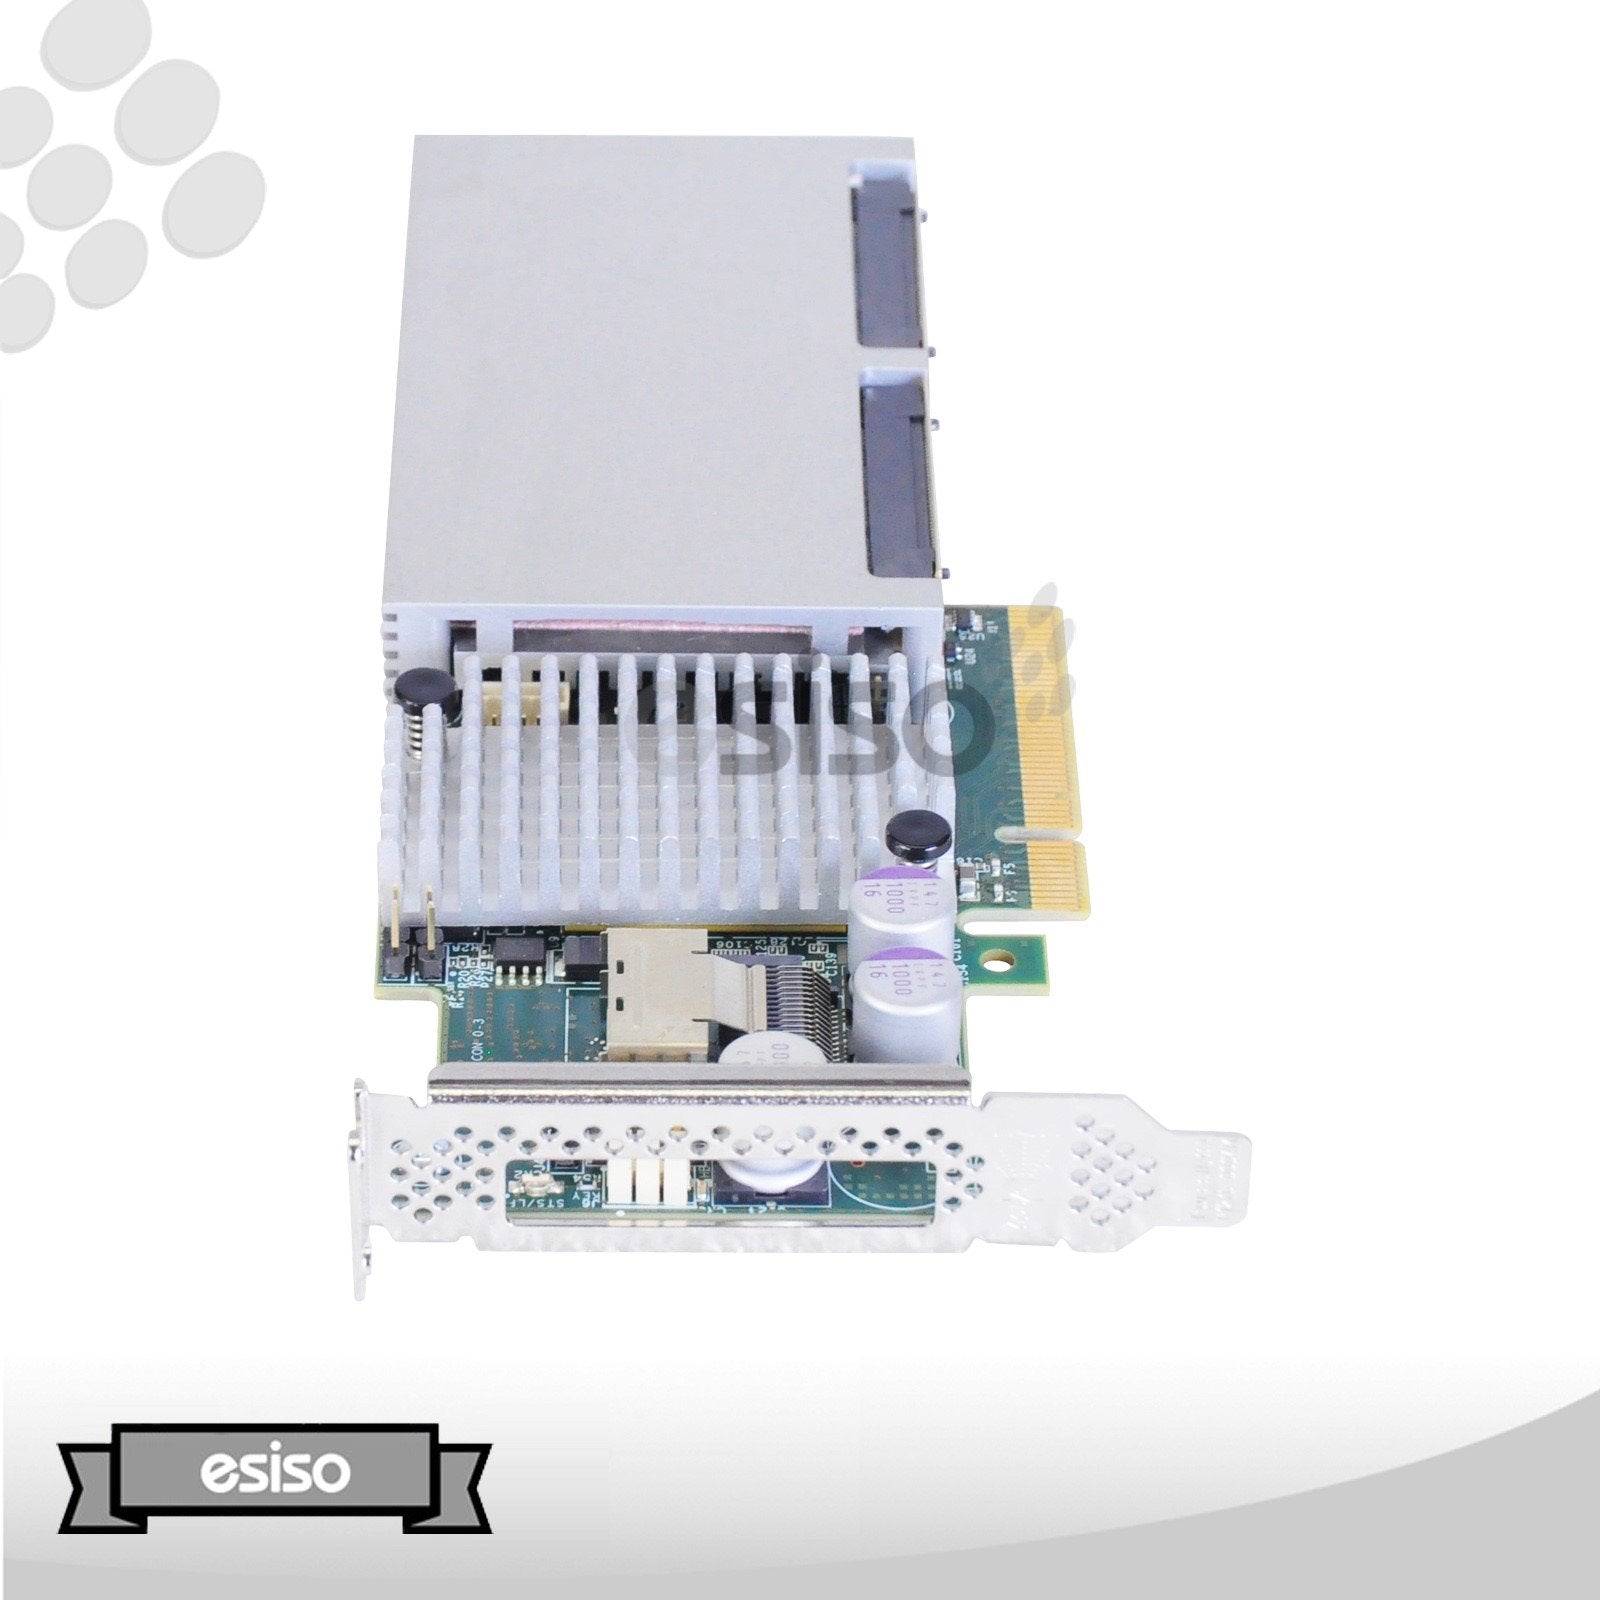 L3-25465-06A LSI SAS ADAPTER RAID CONTROLLER CARD